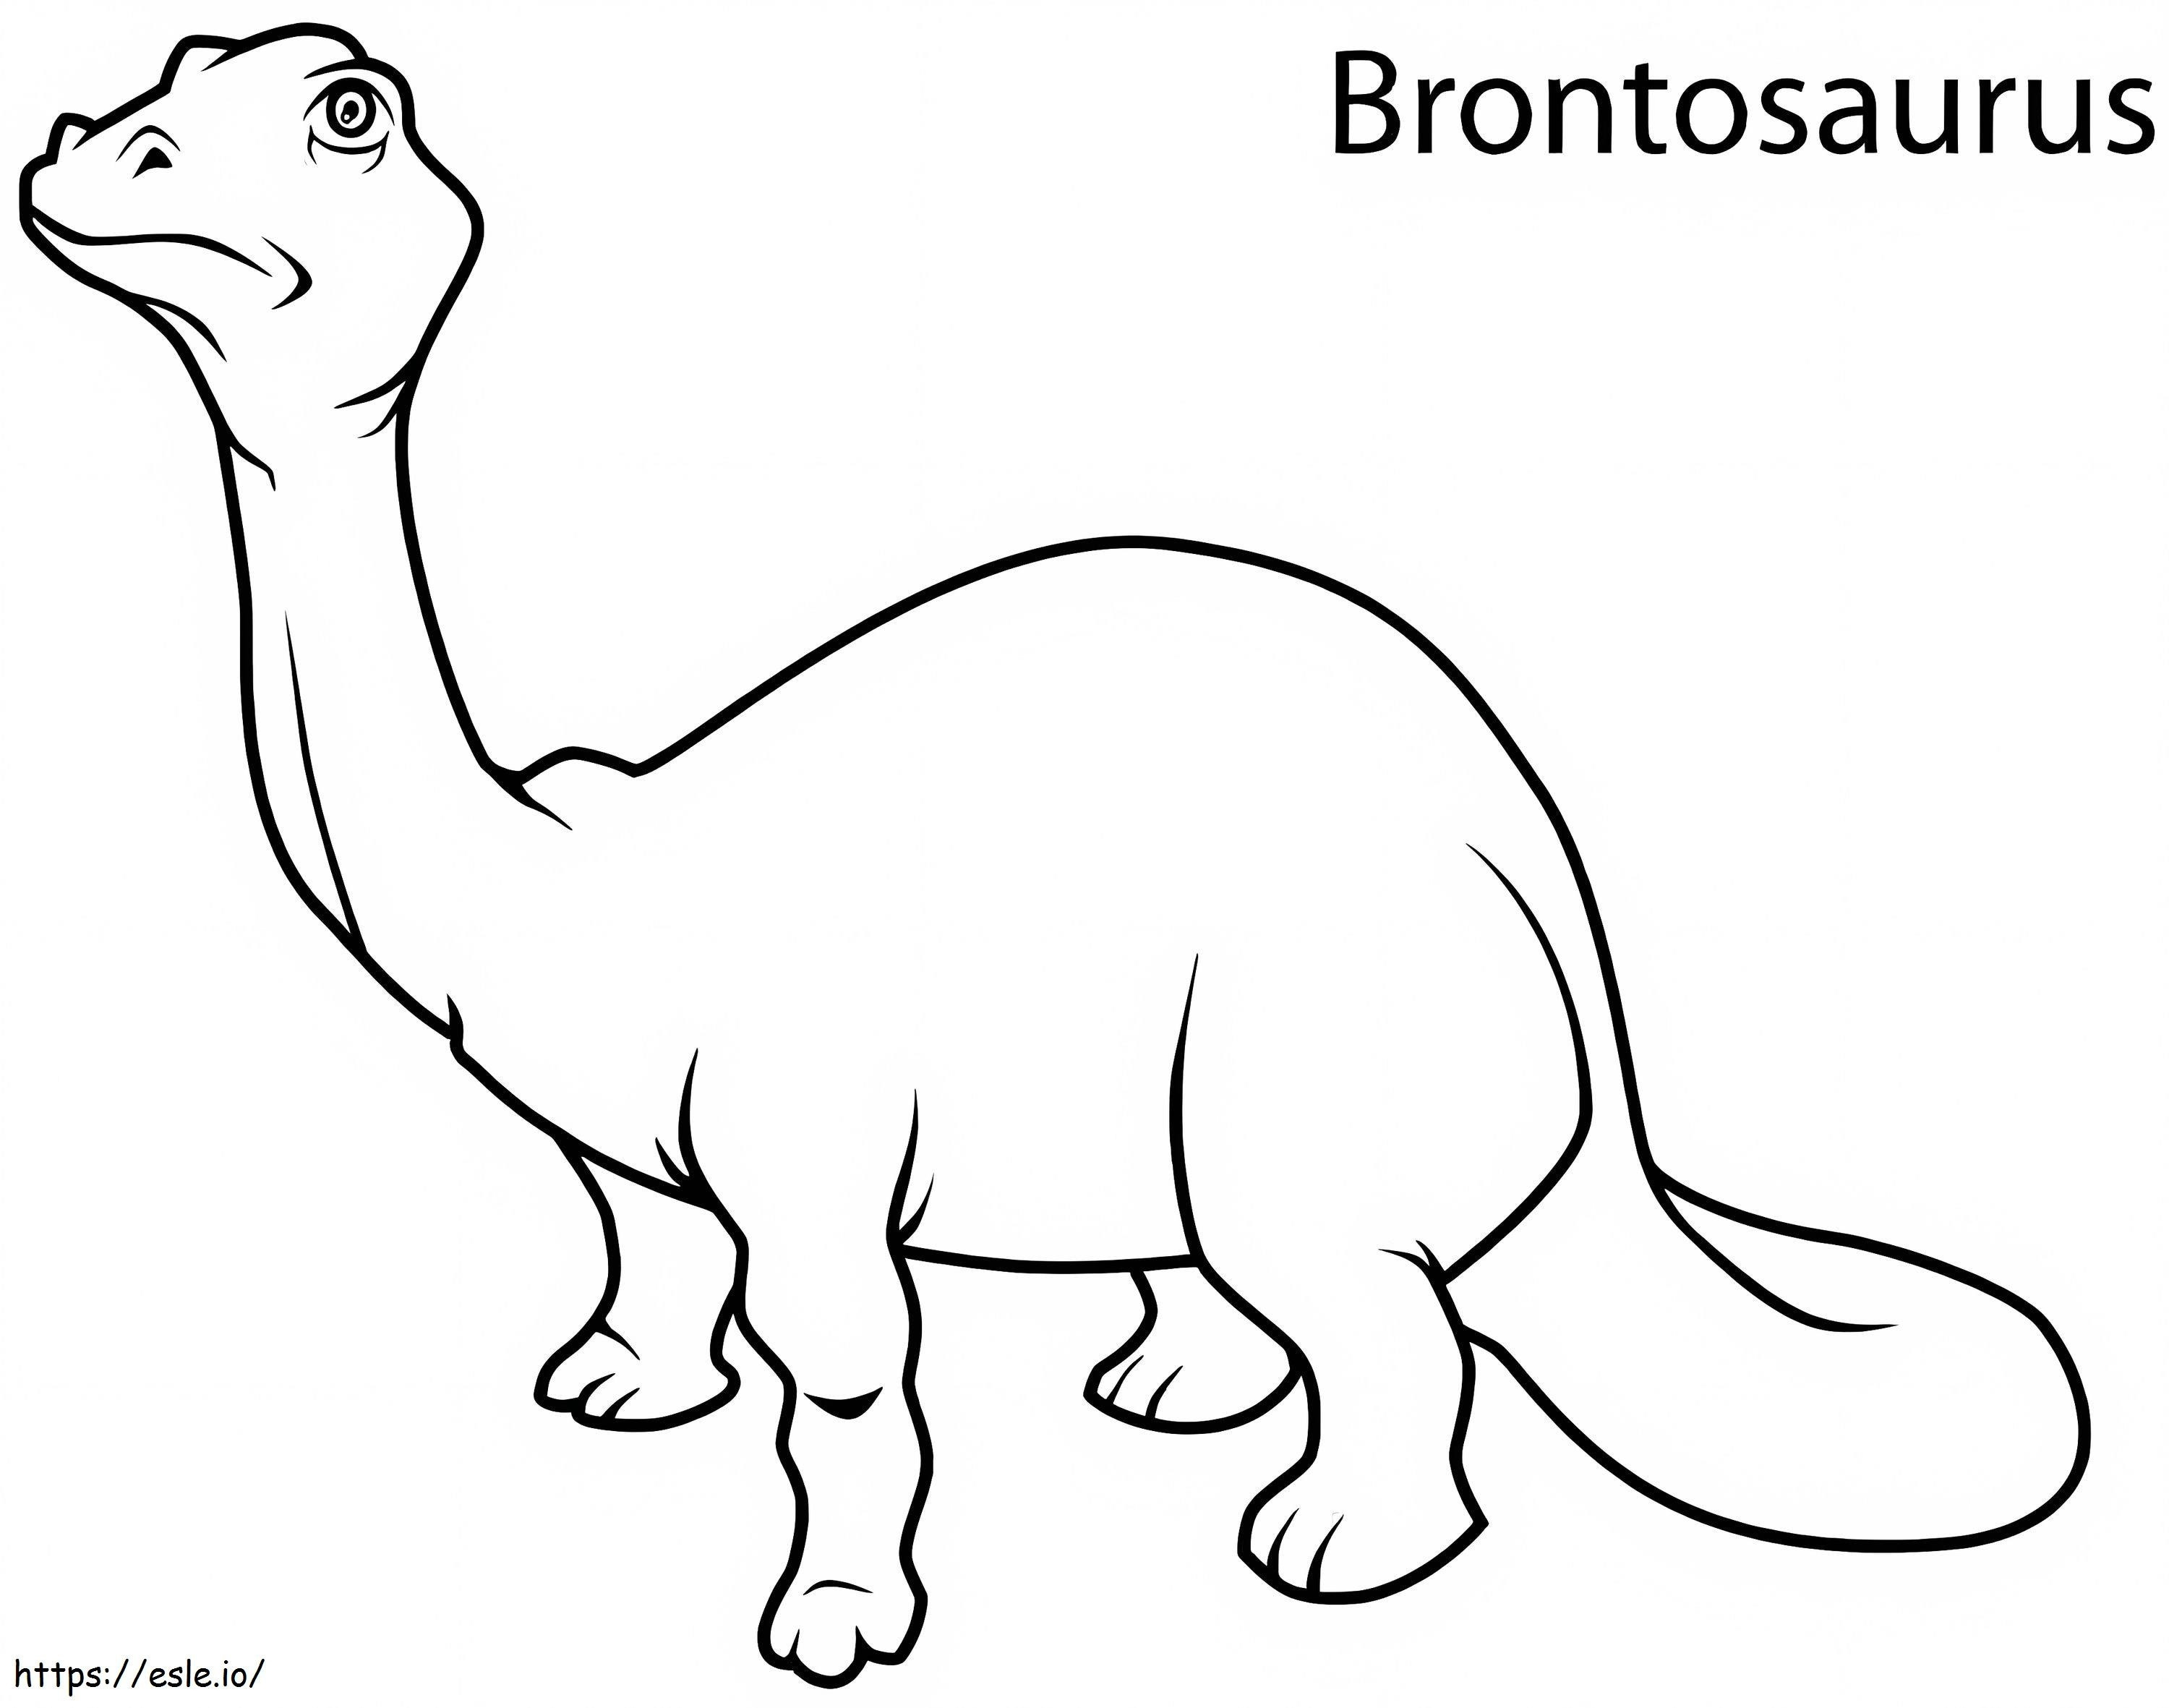 Brontosaurio básico para colorear